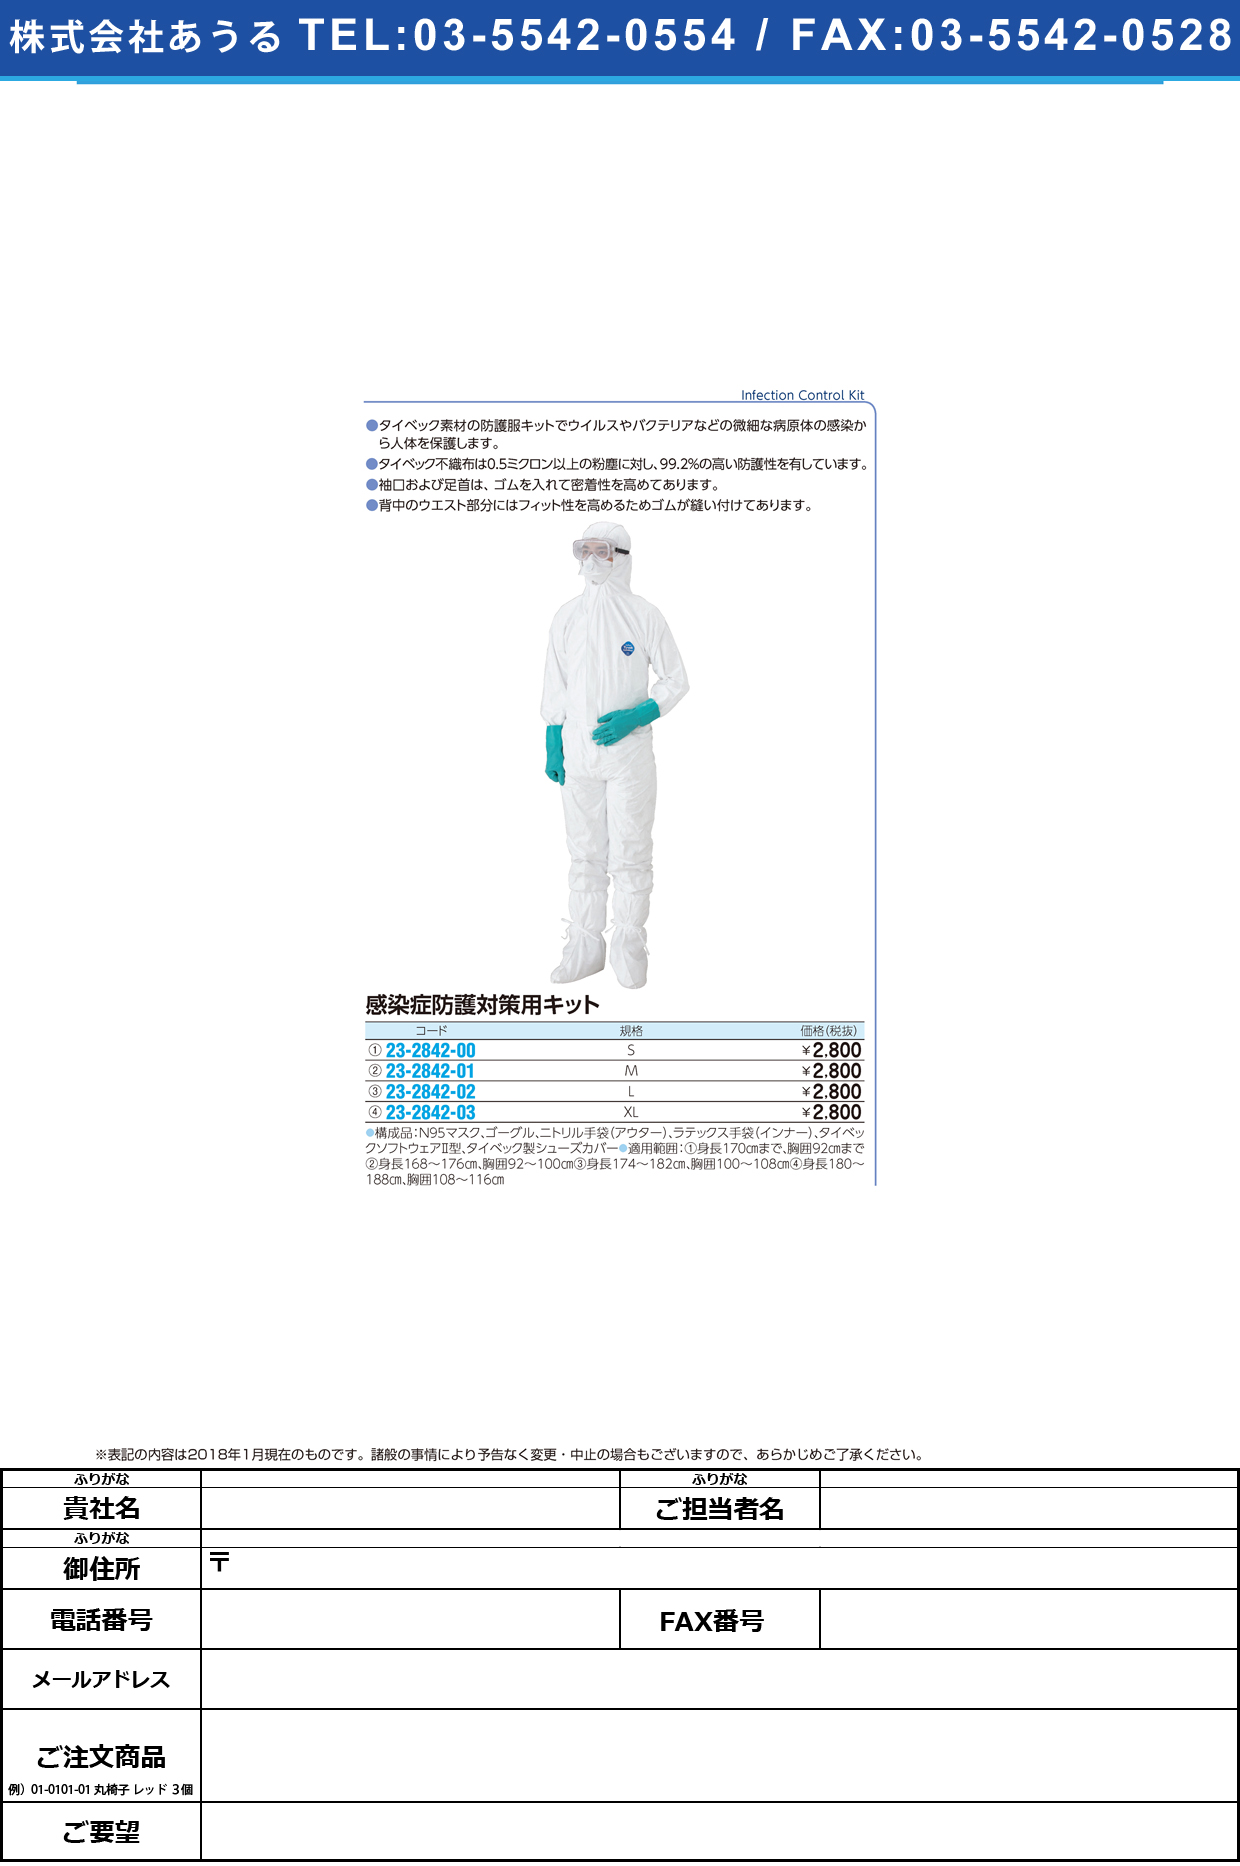 (23-2842-01)感染症防護対策用キット ICK-2(M) ｶﾝｾﾝｼｮｳﾎﾞｳｺﾞﾀｲｻｸﾖｳ【1組単位】【2019年カタログ商品】